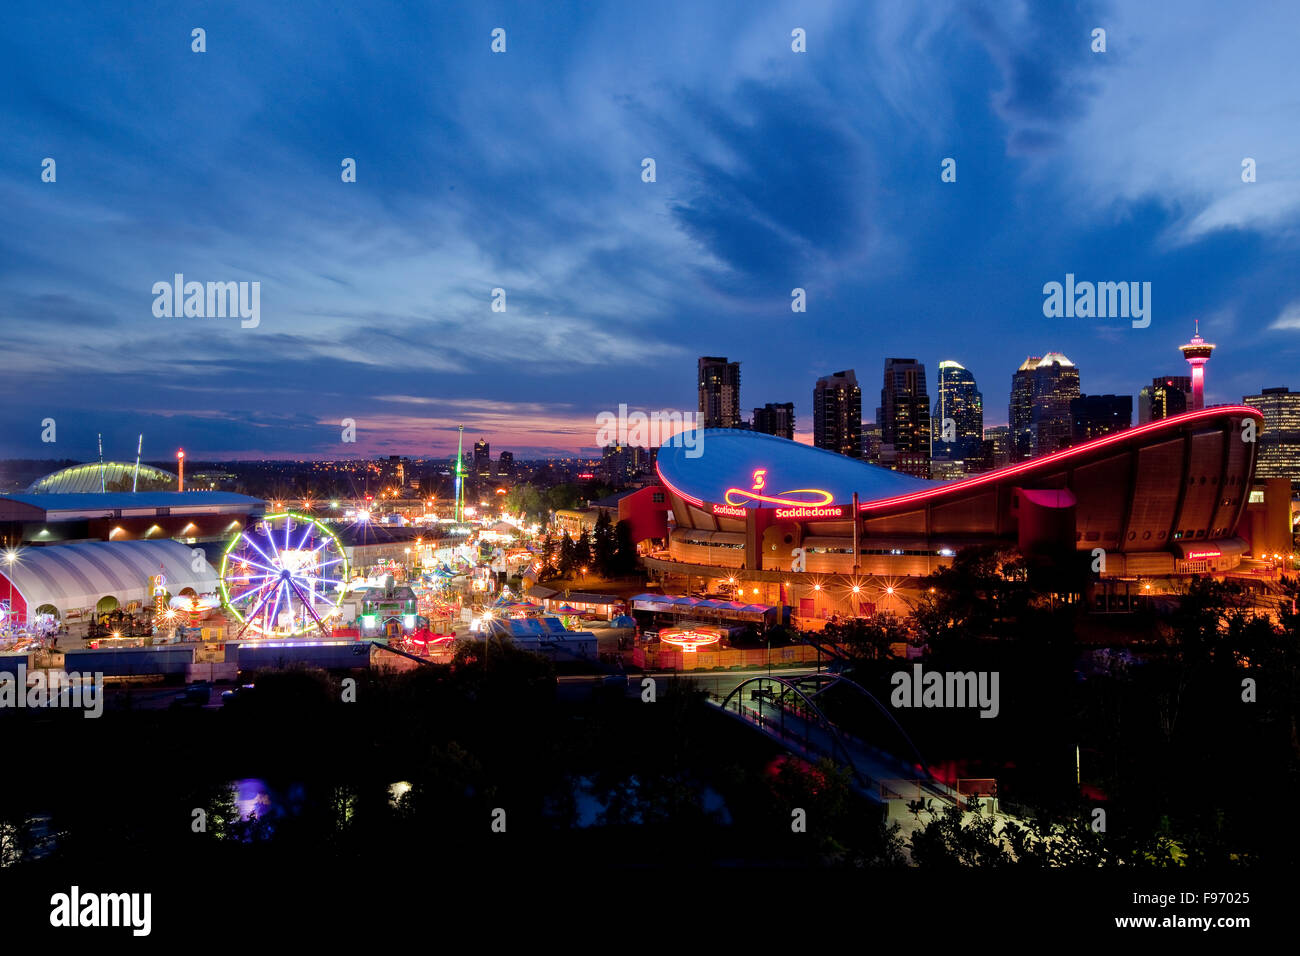 Calgary Stampede grounds and Calgary skyline, Calgary, Alberta, Canada. Stock Photo